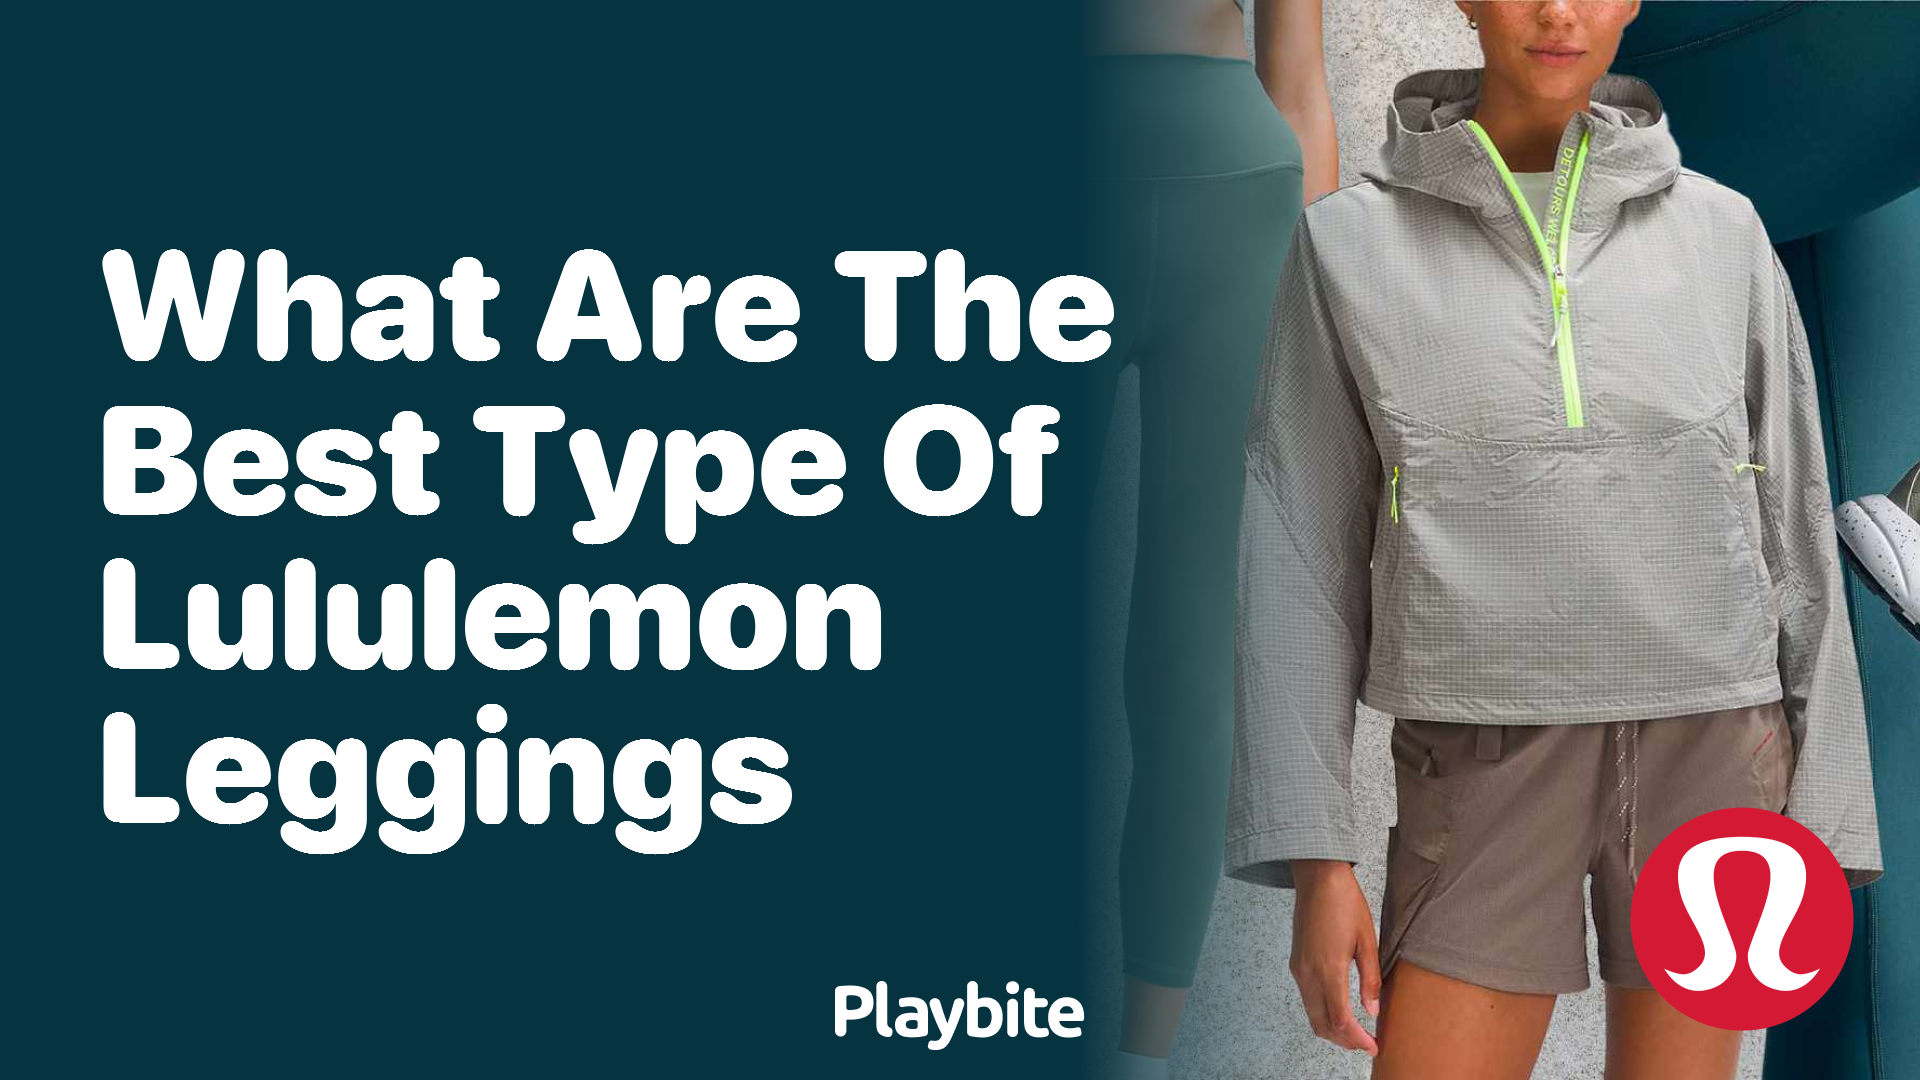 What Are the Best Types of Lululemon Leggings? - Playbite